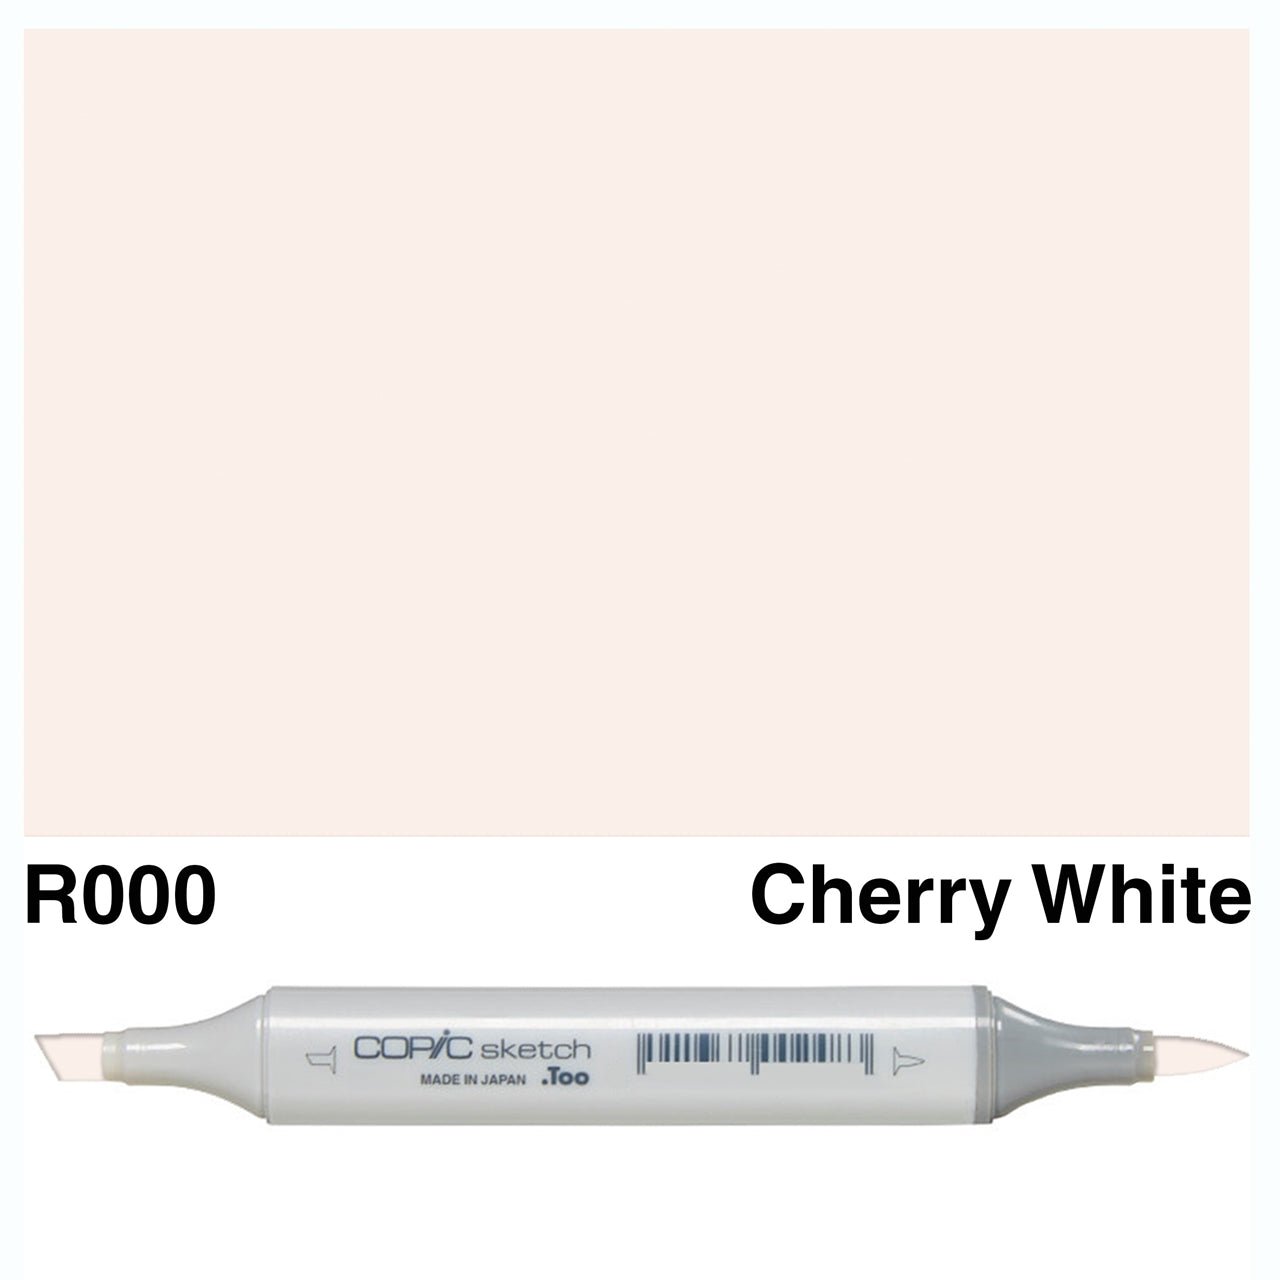 Copic Sketch R000 Cherry White - theartshop.com.au